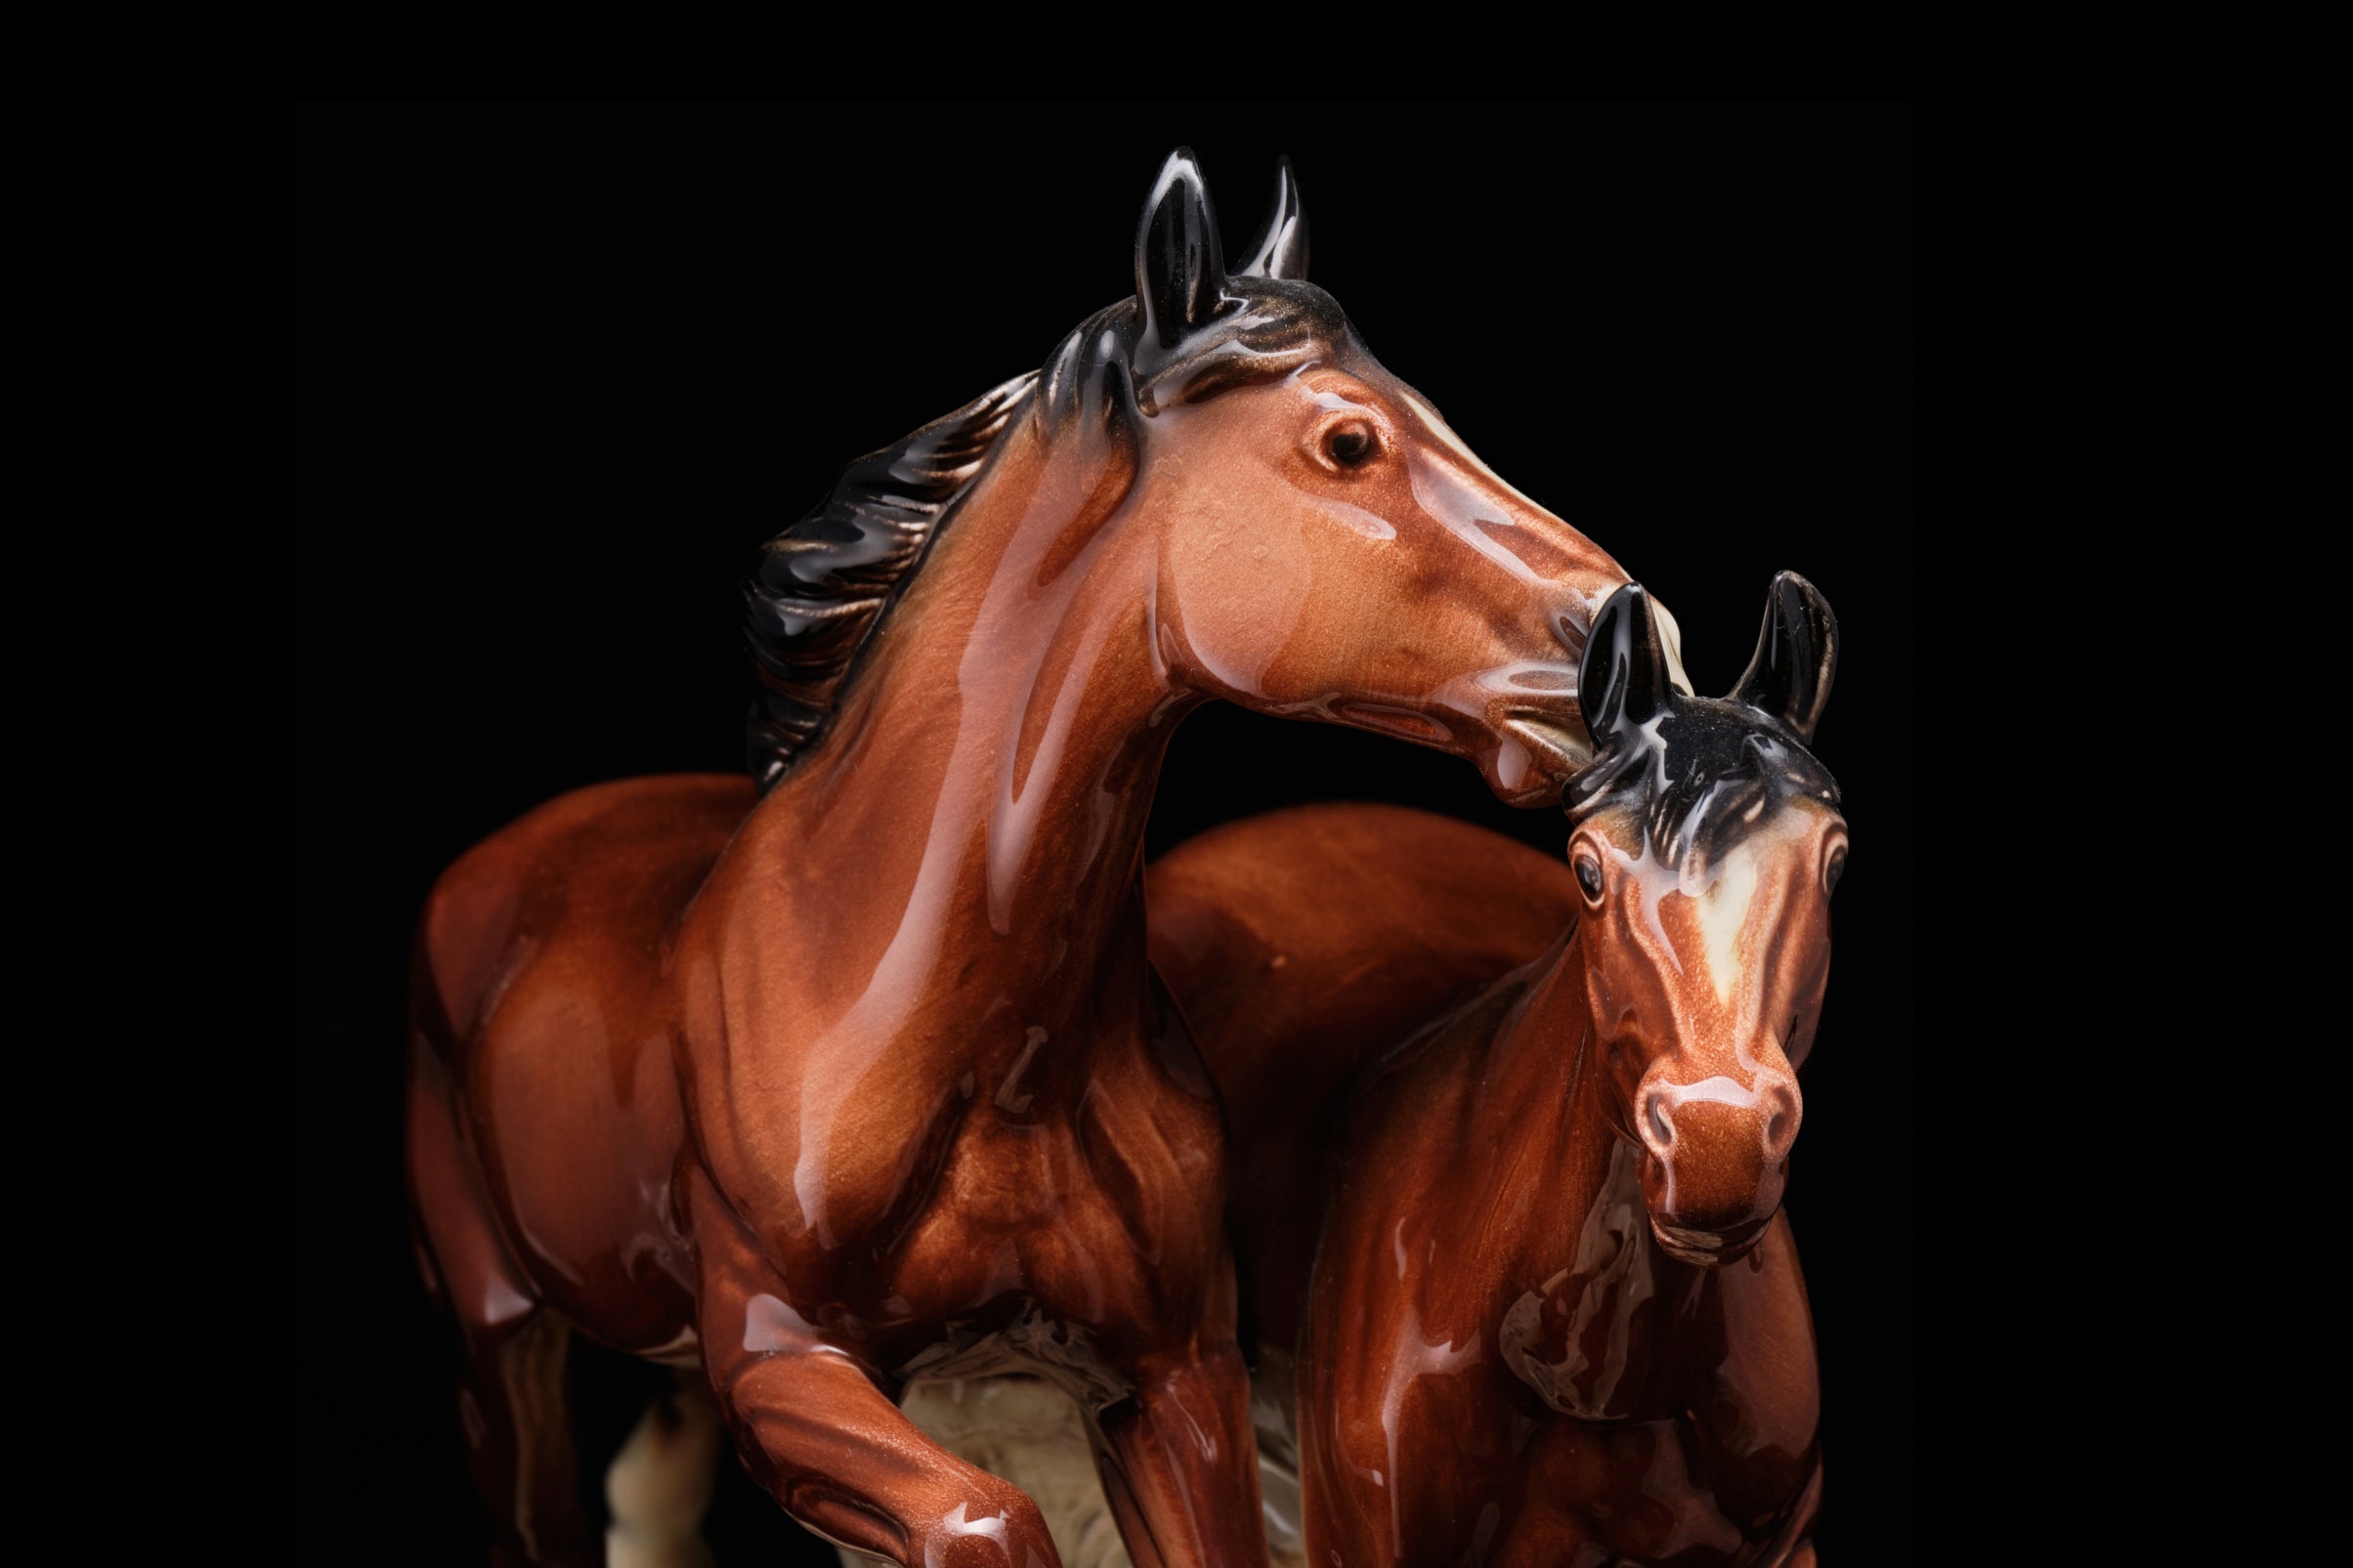 German Horse Figure Group by Katzhuitte.